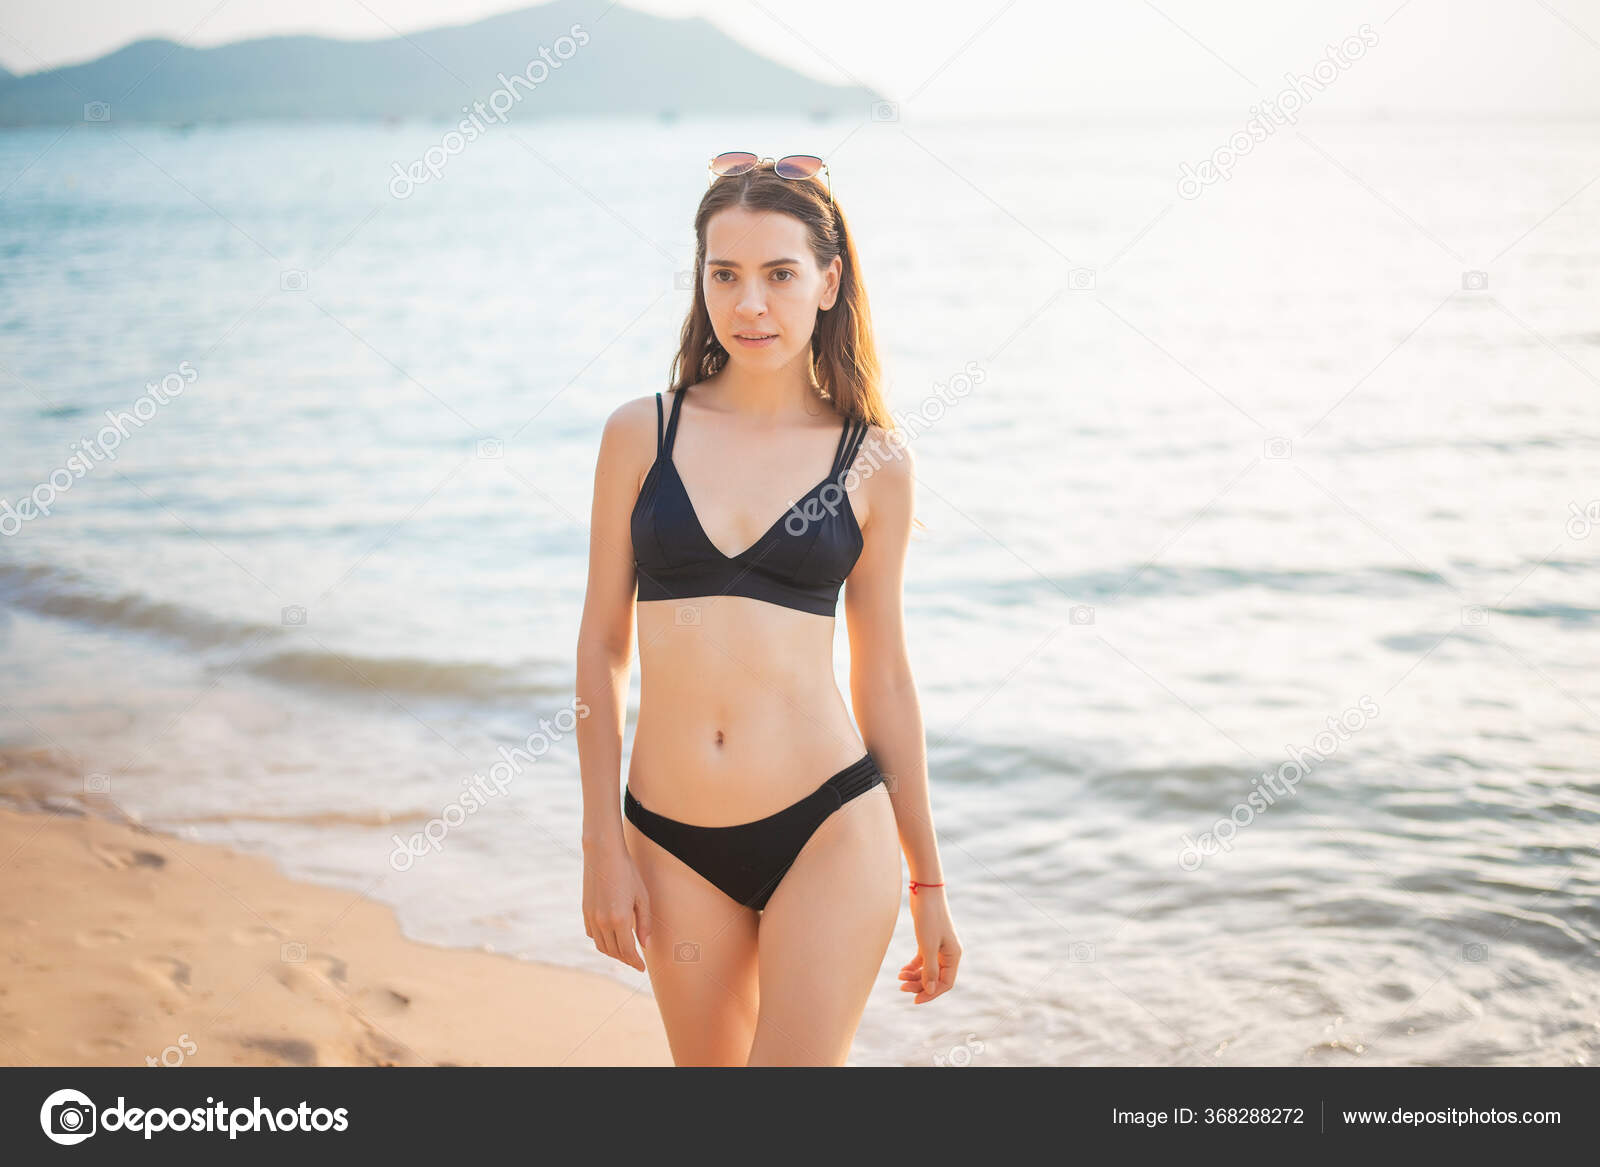 Kelsey asbille chow bikini